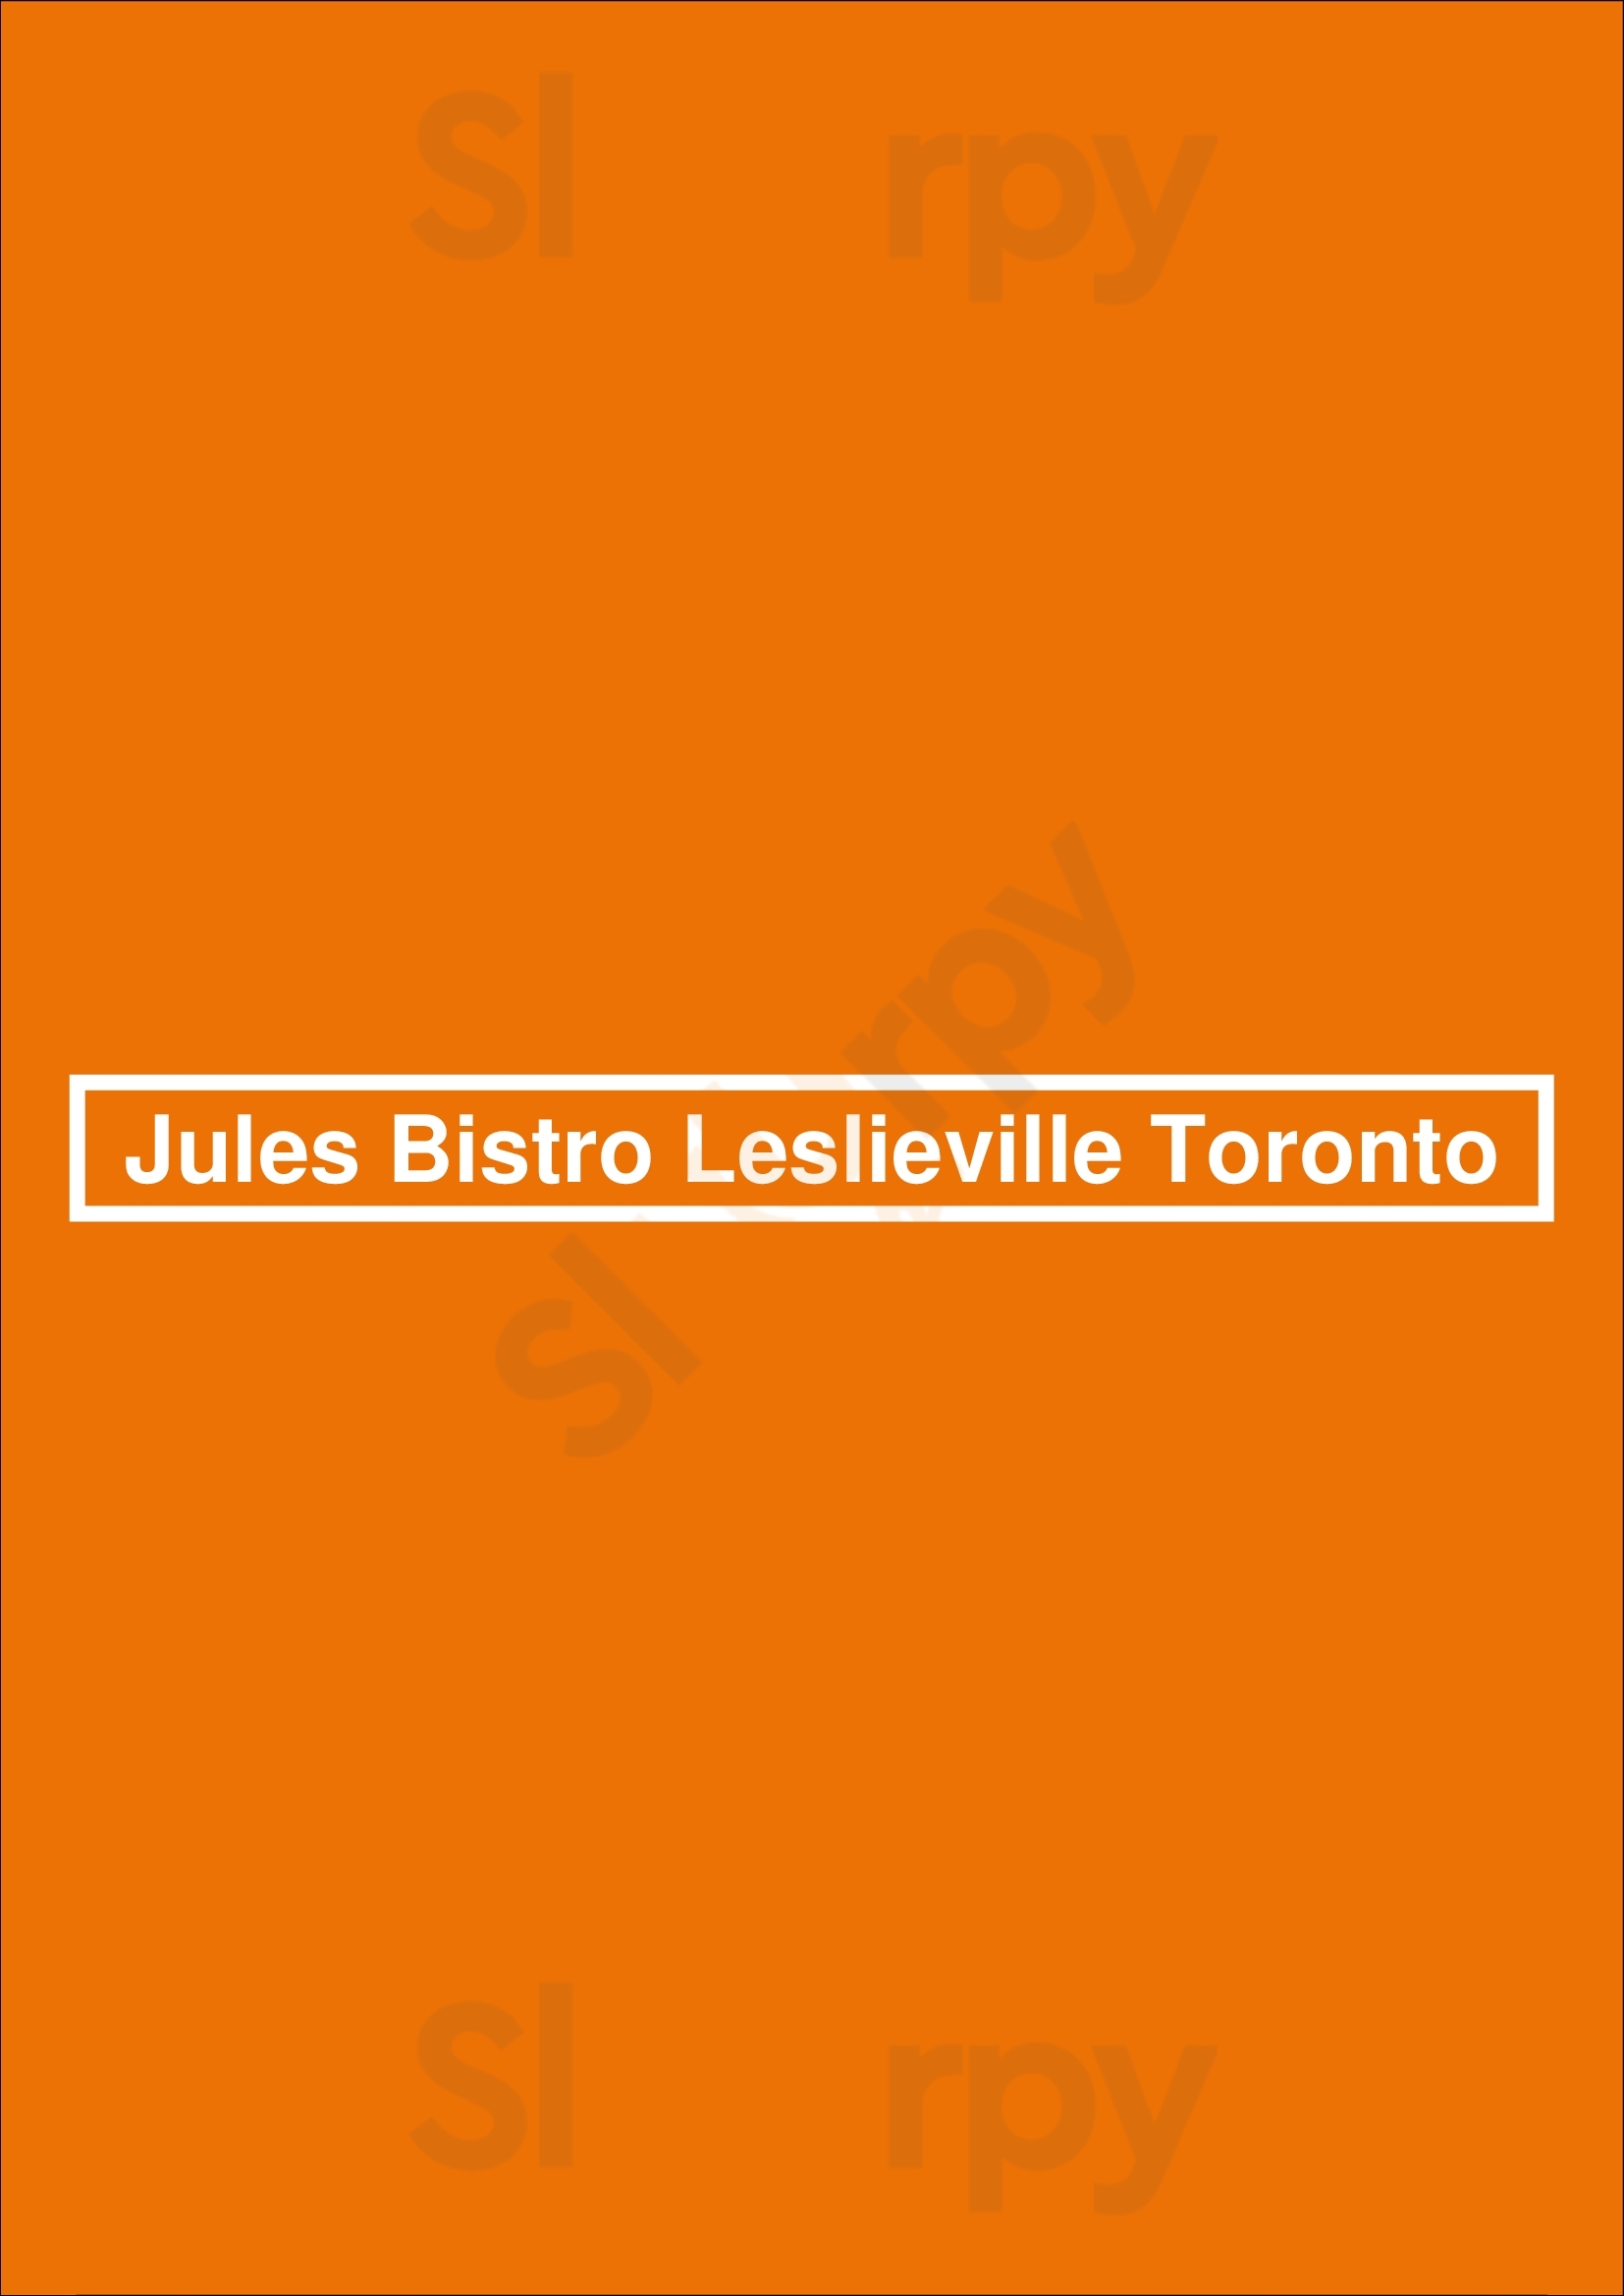 Jules Bistro Leslieville Toronto Toronto Menu - 1